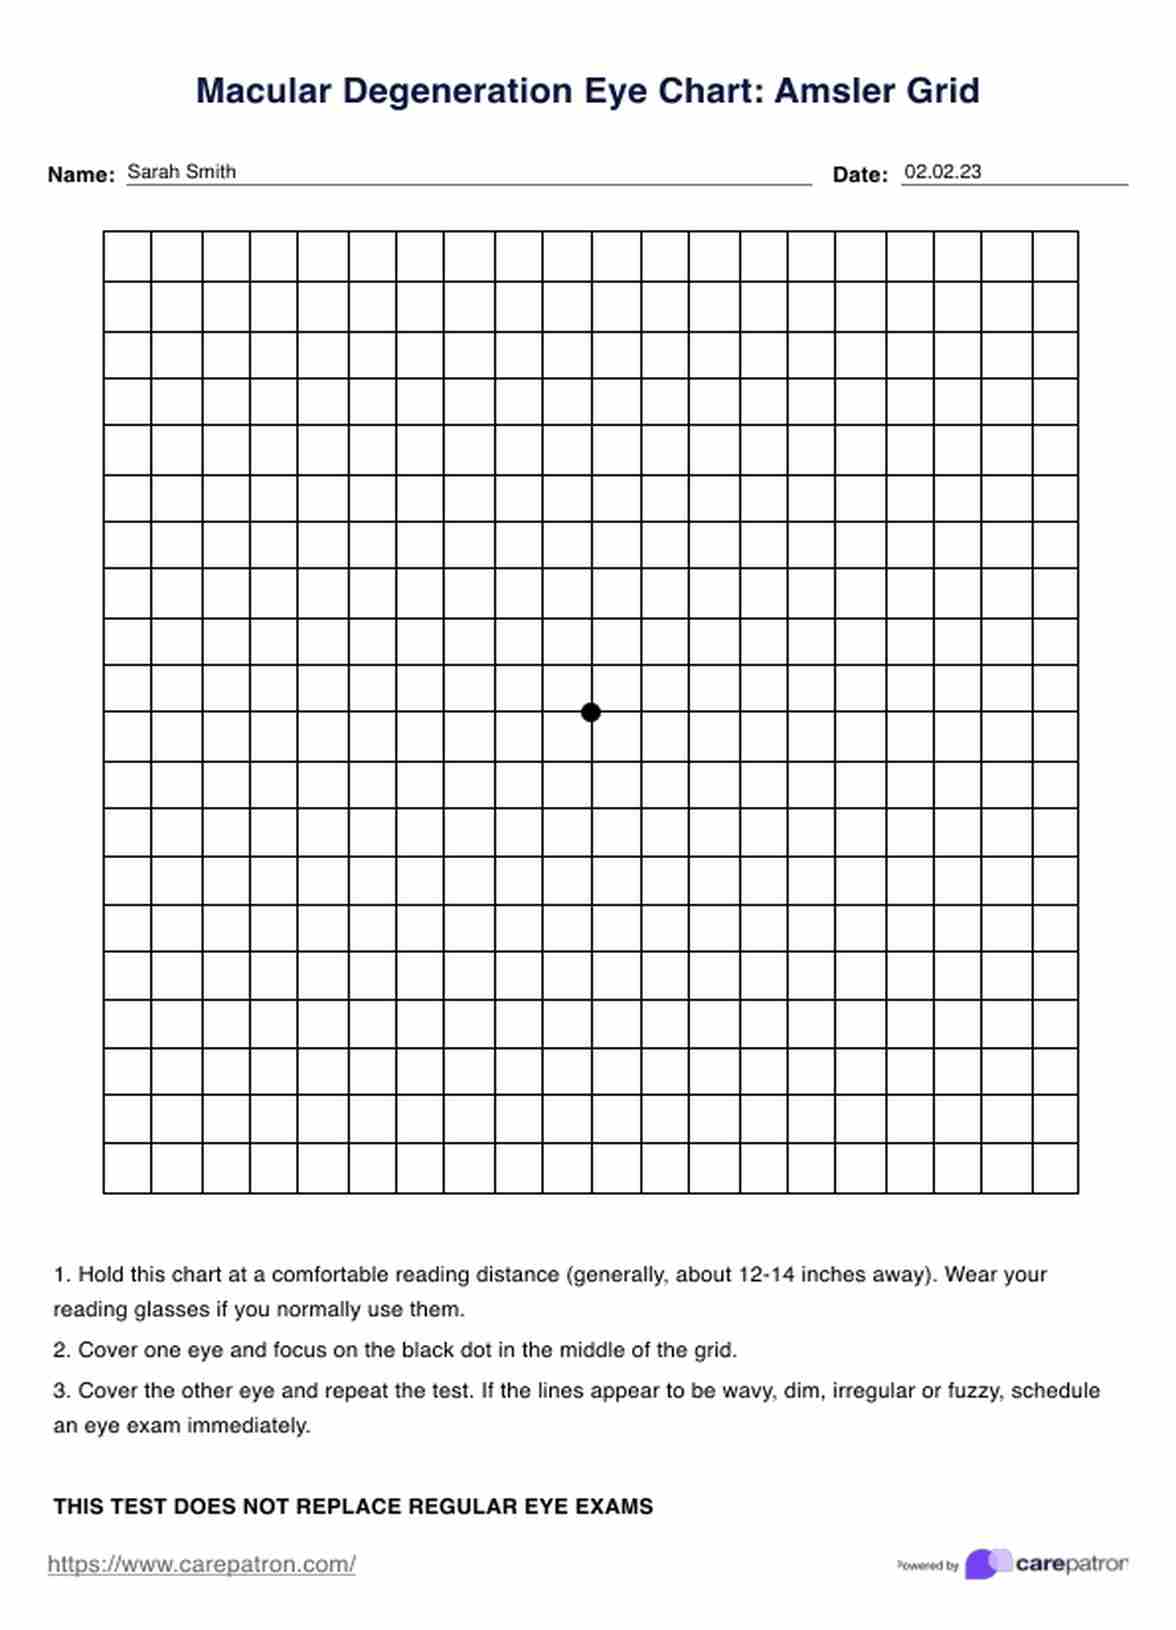 Macular Degeneration Eye Chart PDF Example